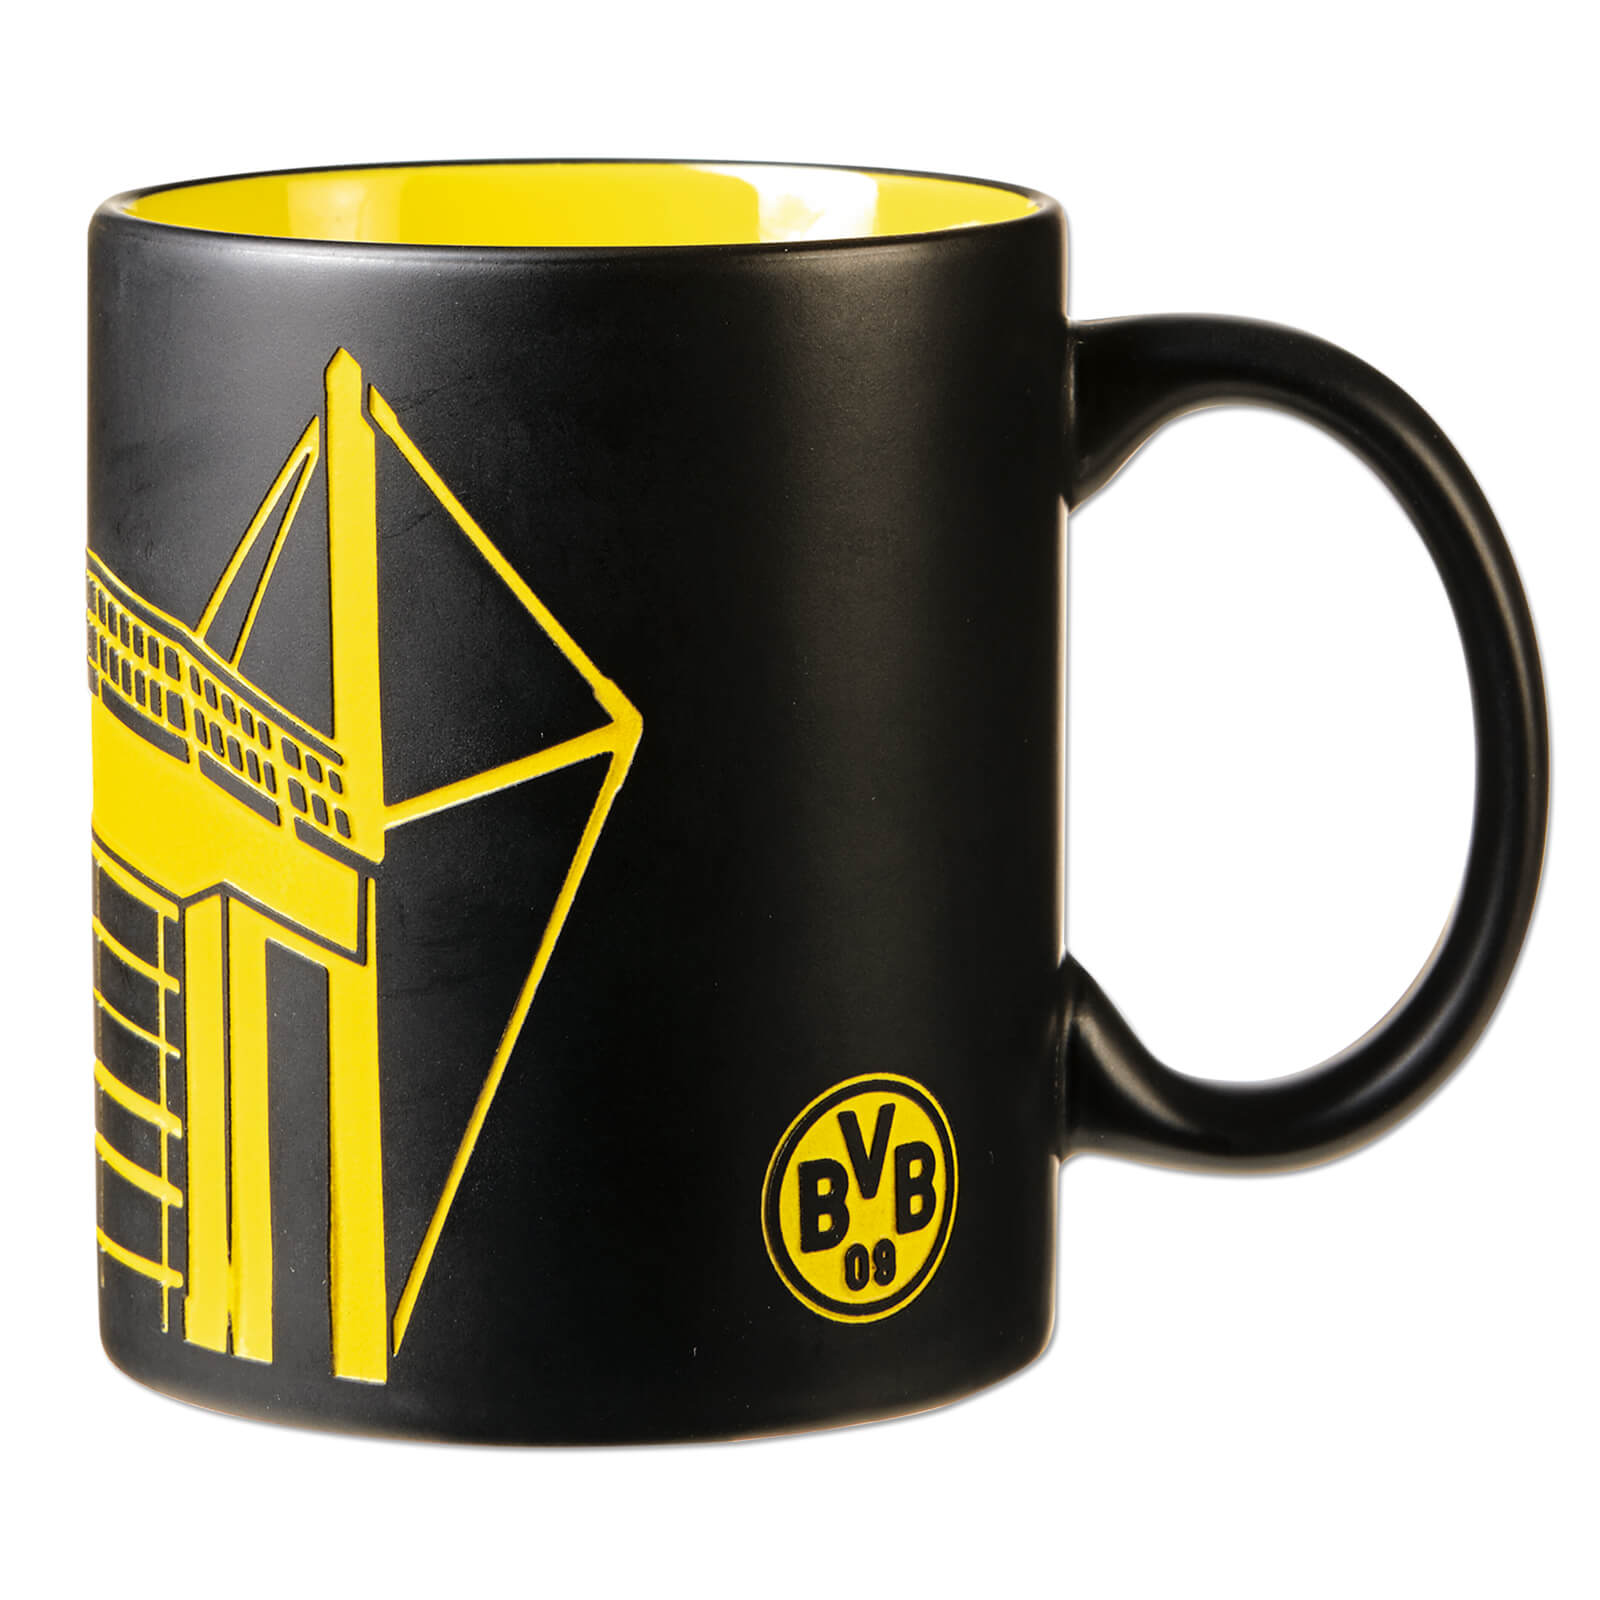 BVB Dortmund Kaffeebecher Thermobecher Becher Tasse Coffee to go BVB Fanartikel 